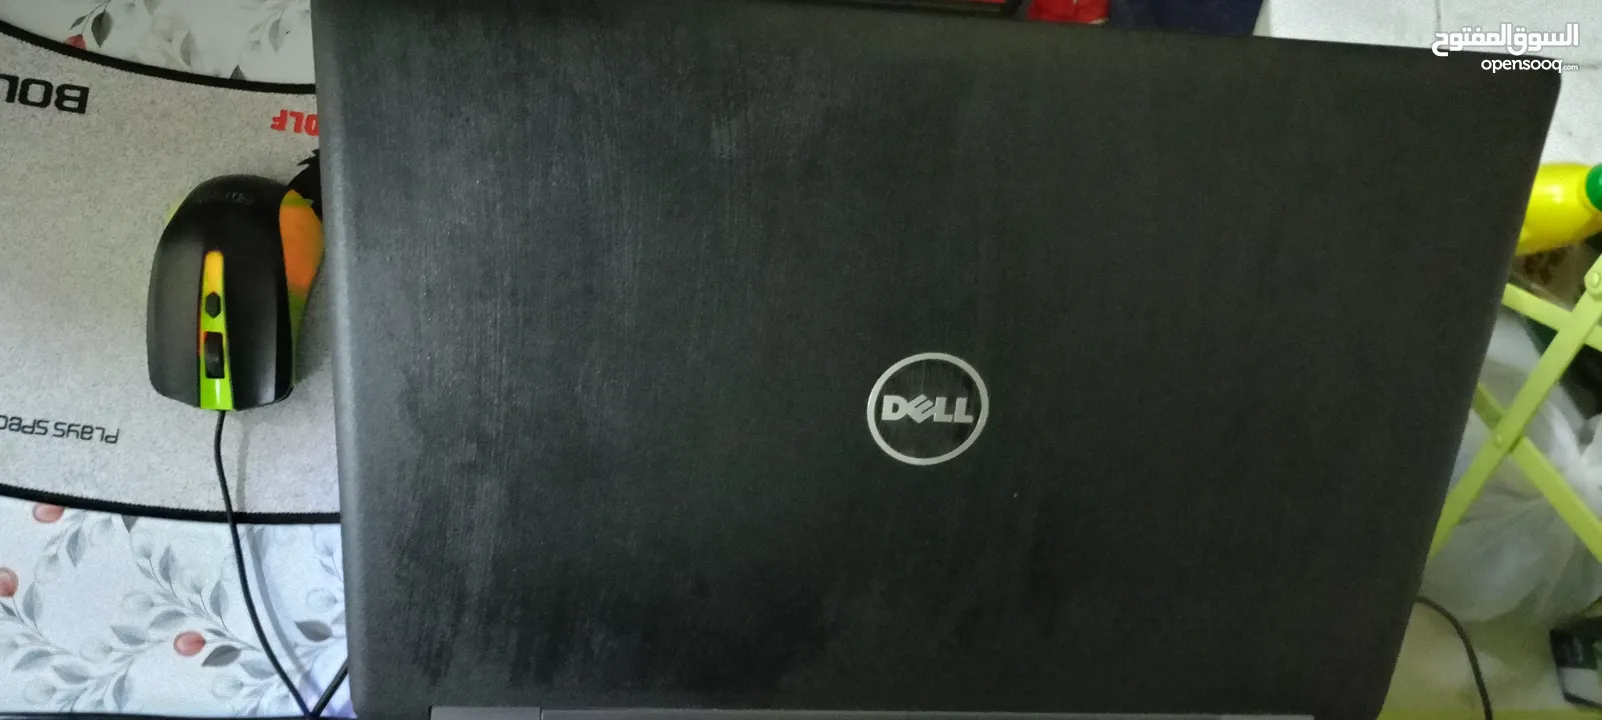 Dell Precision 3520 Business Laptop PC i5-7th Generation, 16GB RAM, 256GB SSD, 2GB VGA